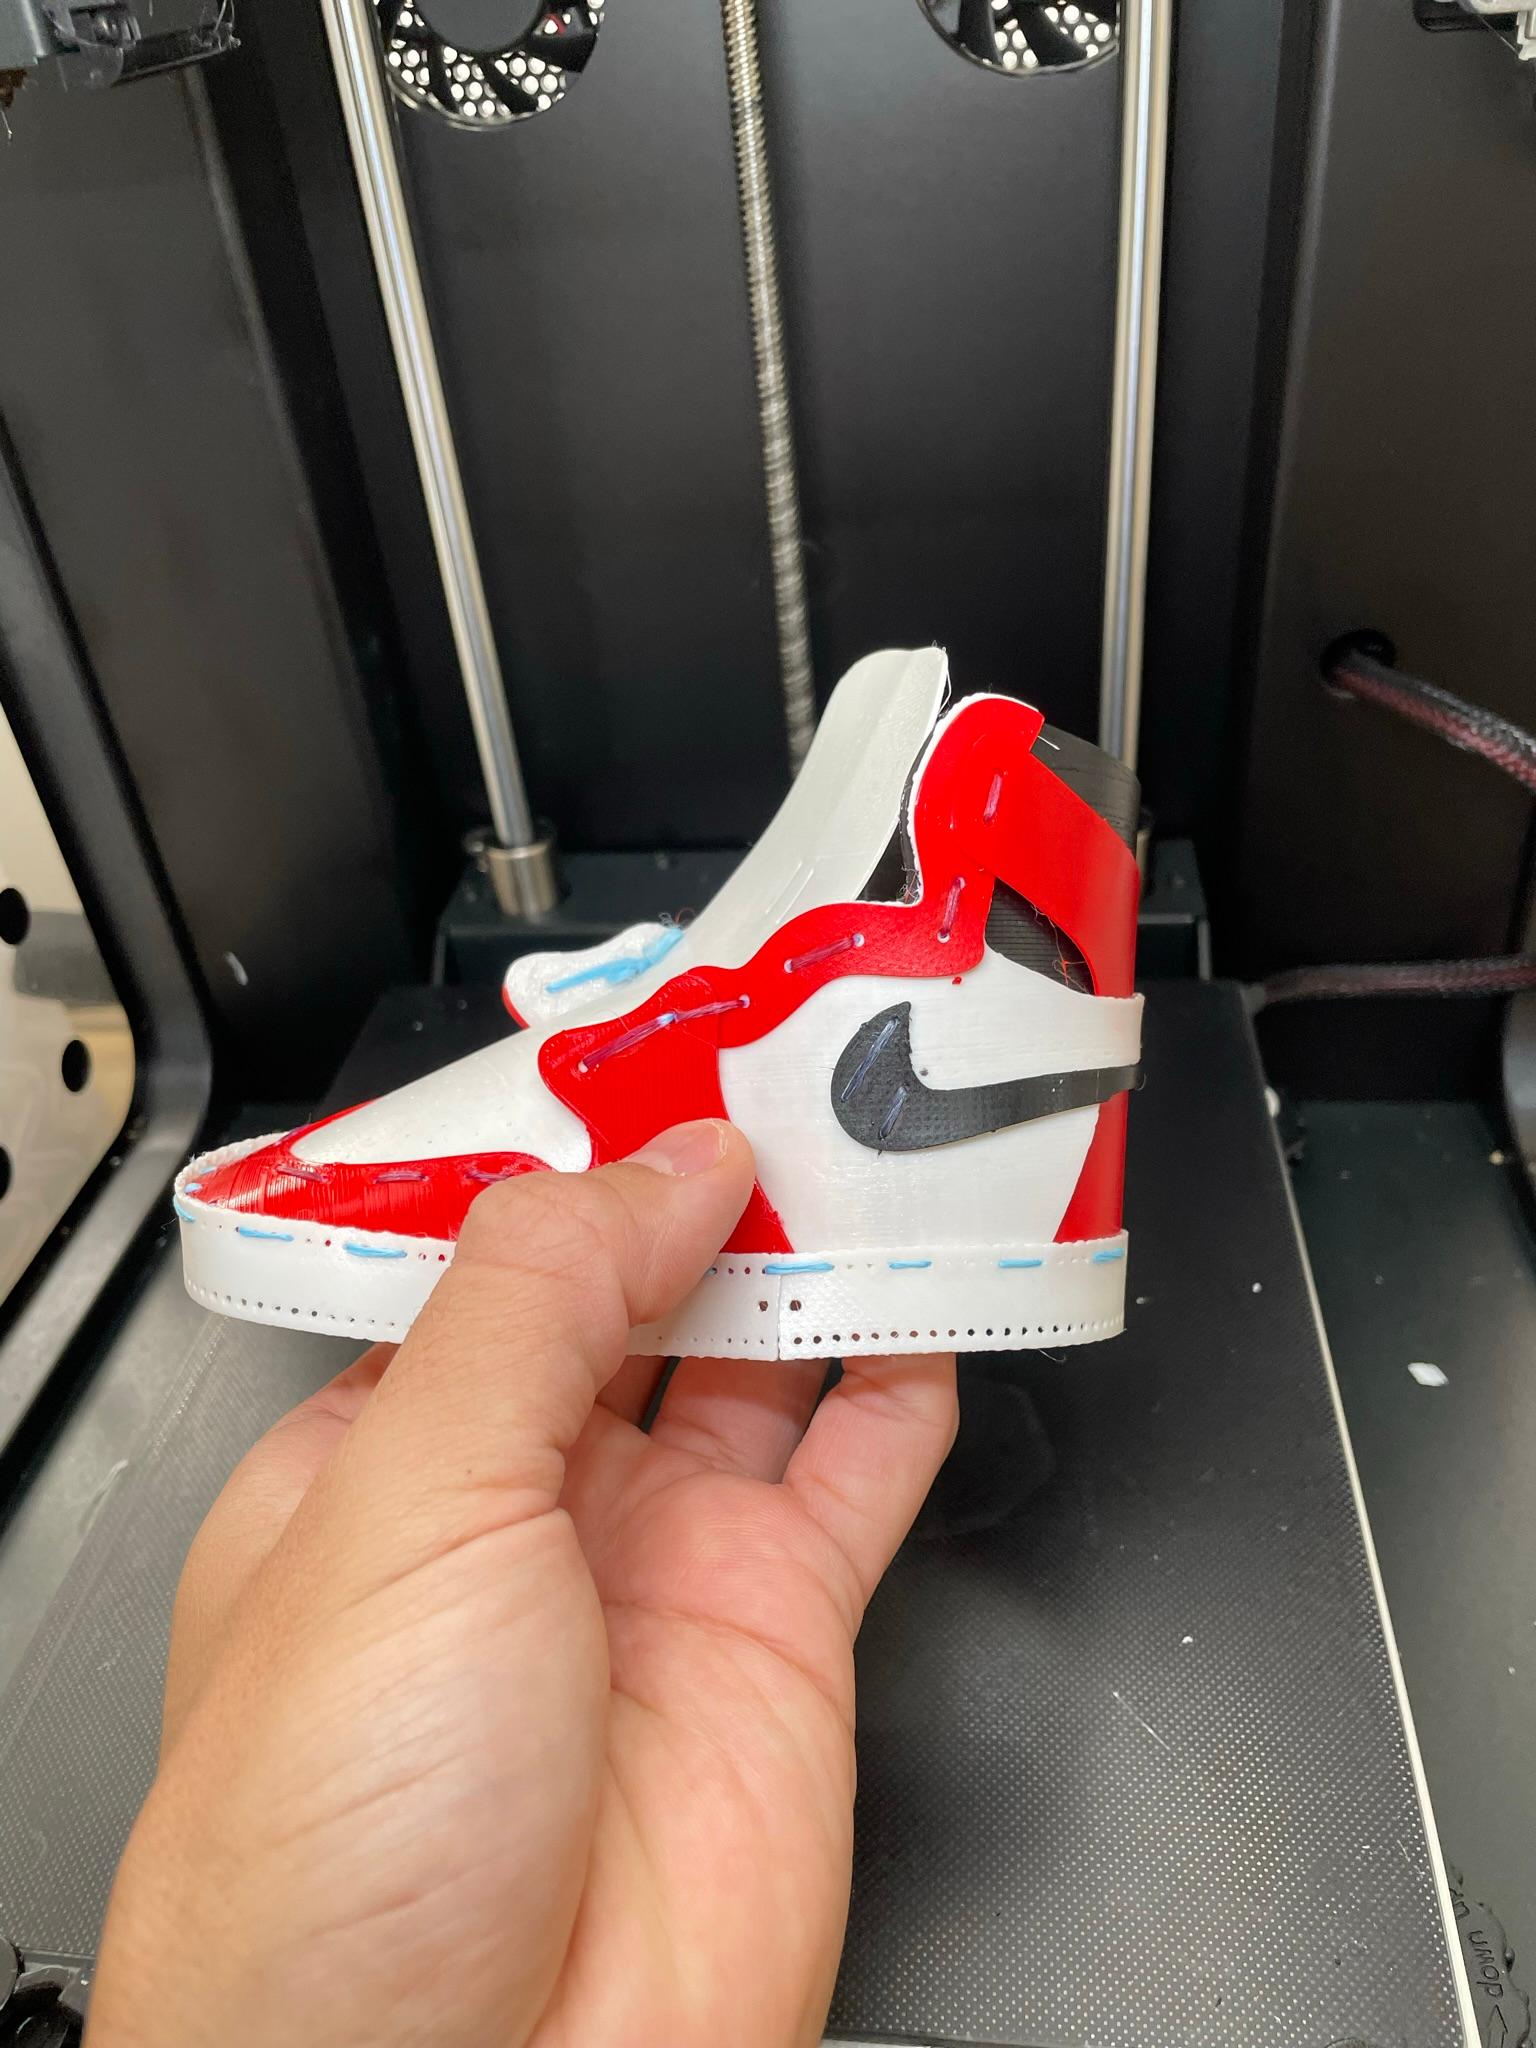 Nike Air Jordan For Flexible filament - Need Help! 3d model